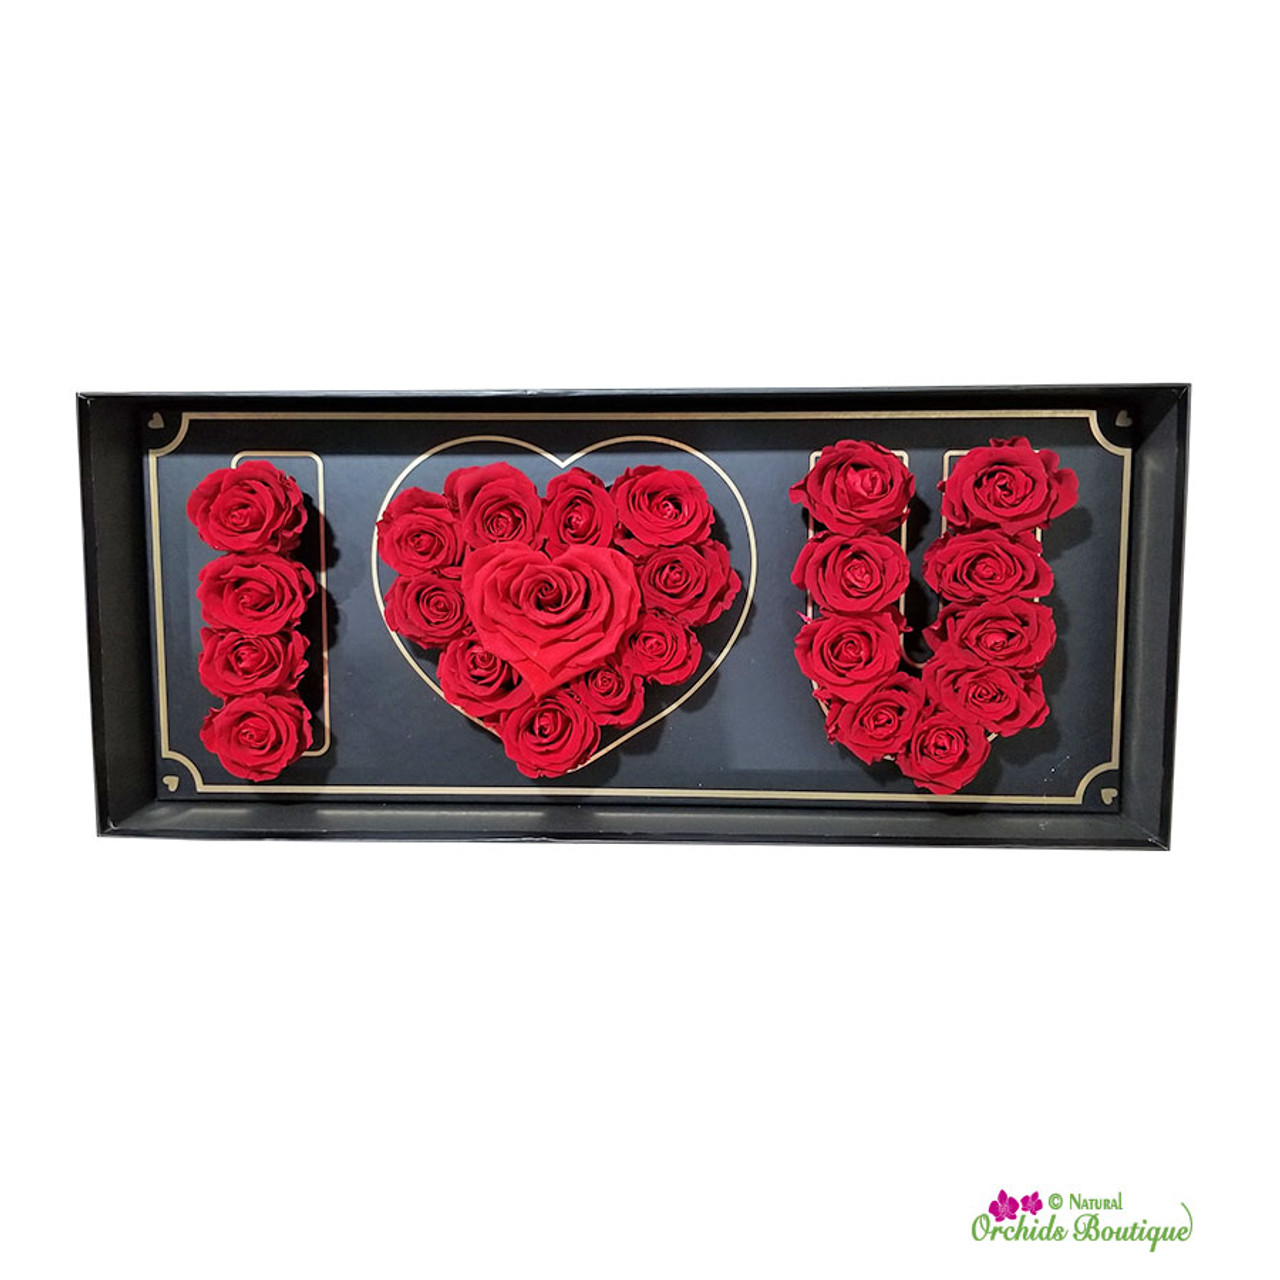 I Love You Roses Gift Box